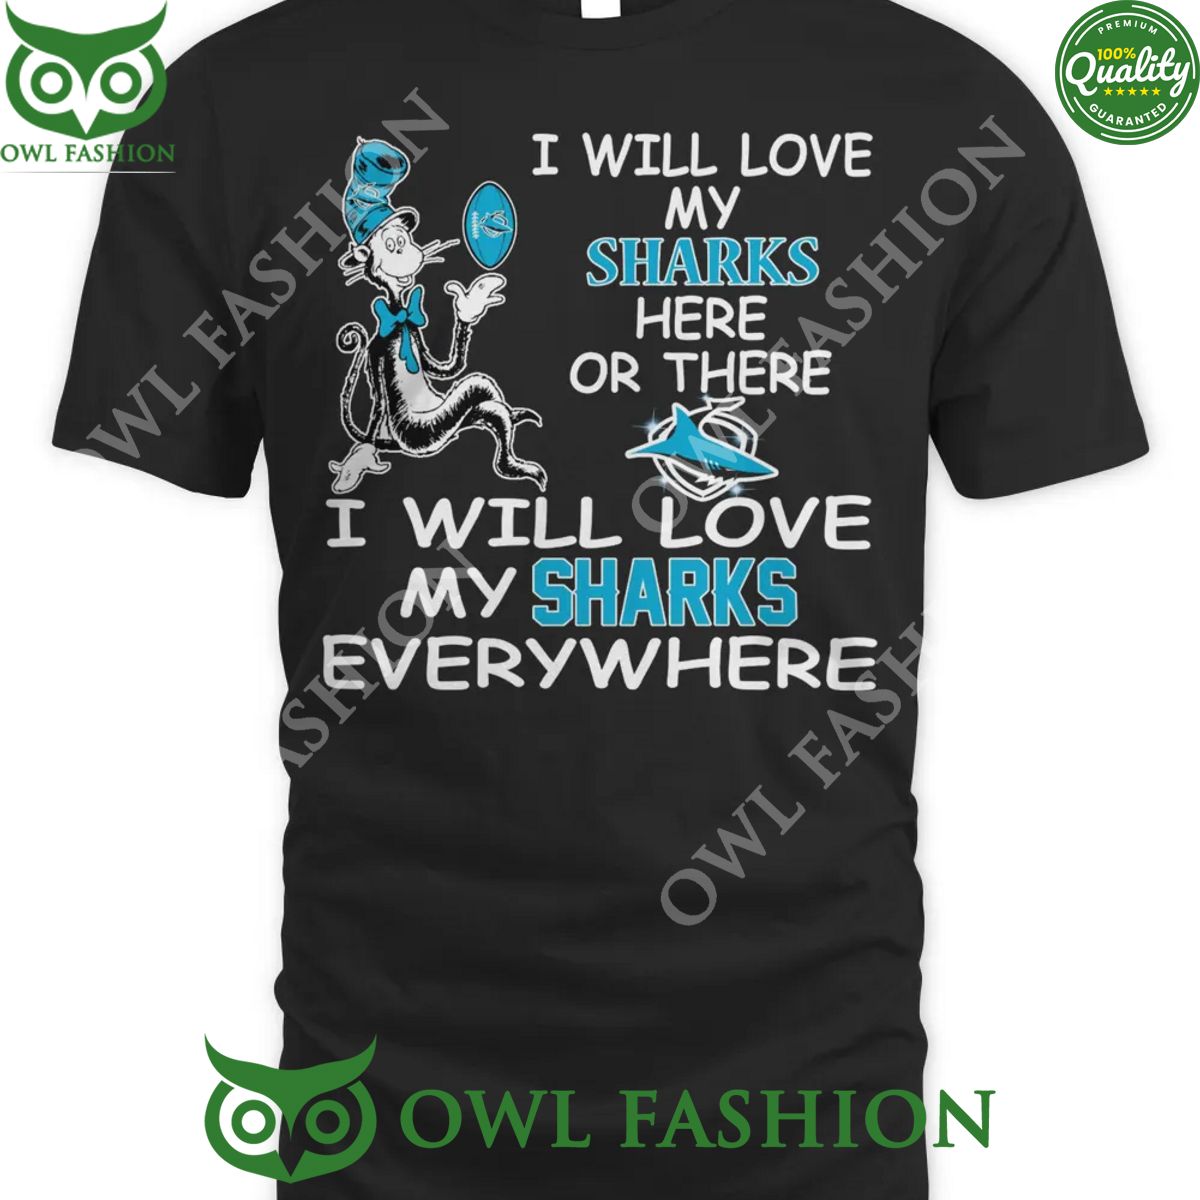 i will love my sharks here or there everywhere cronulla sutherland sharks nrl t shirt 2 2q2eZ.jpg